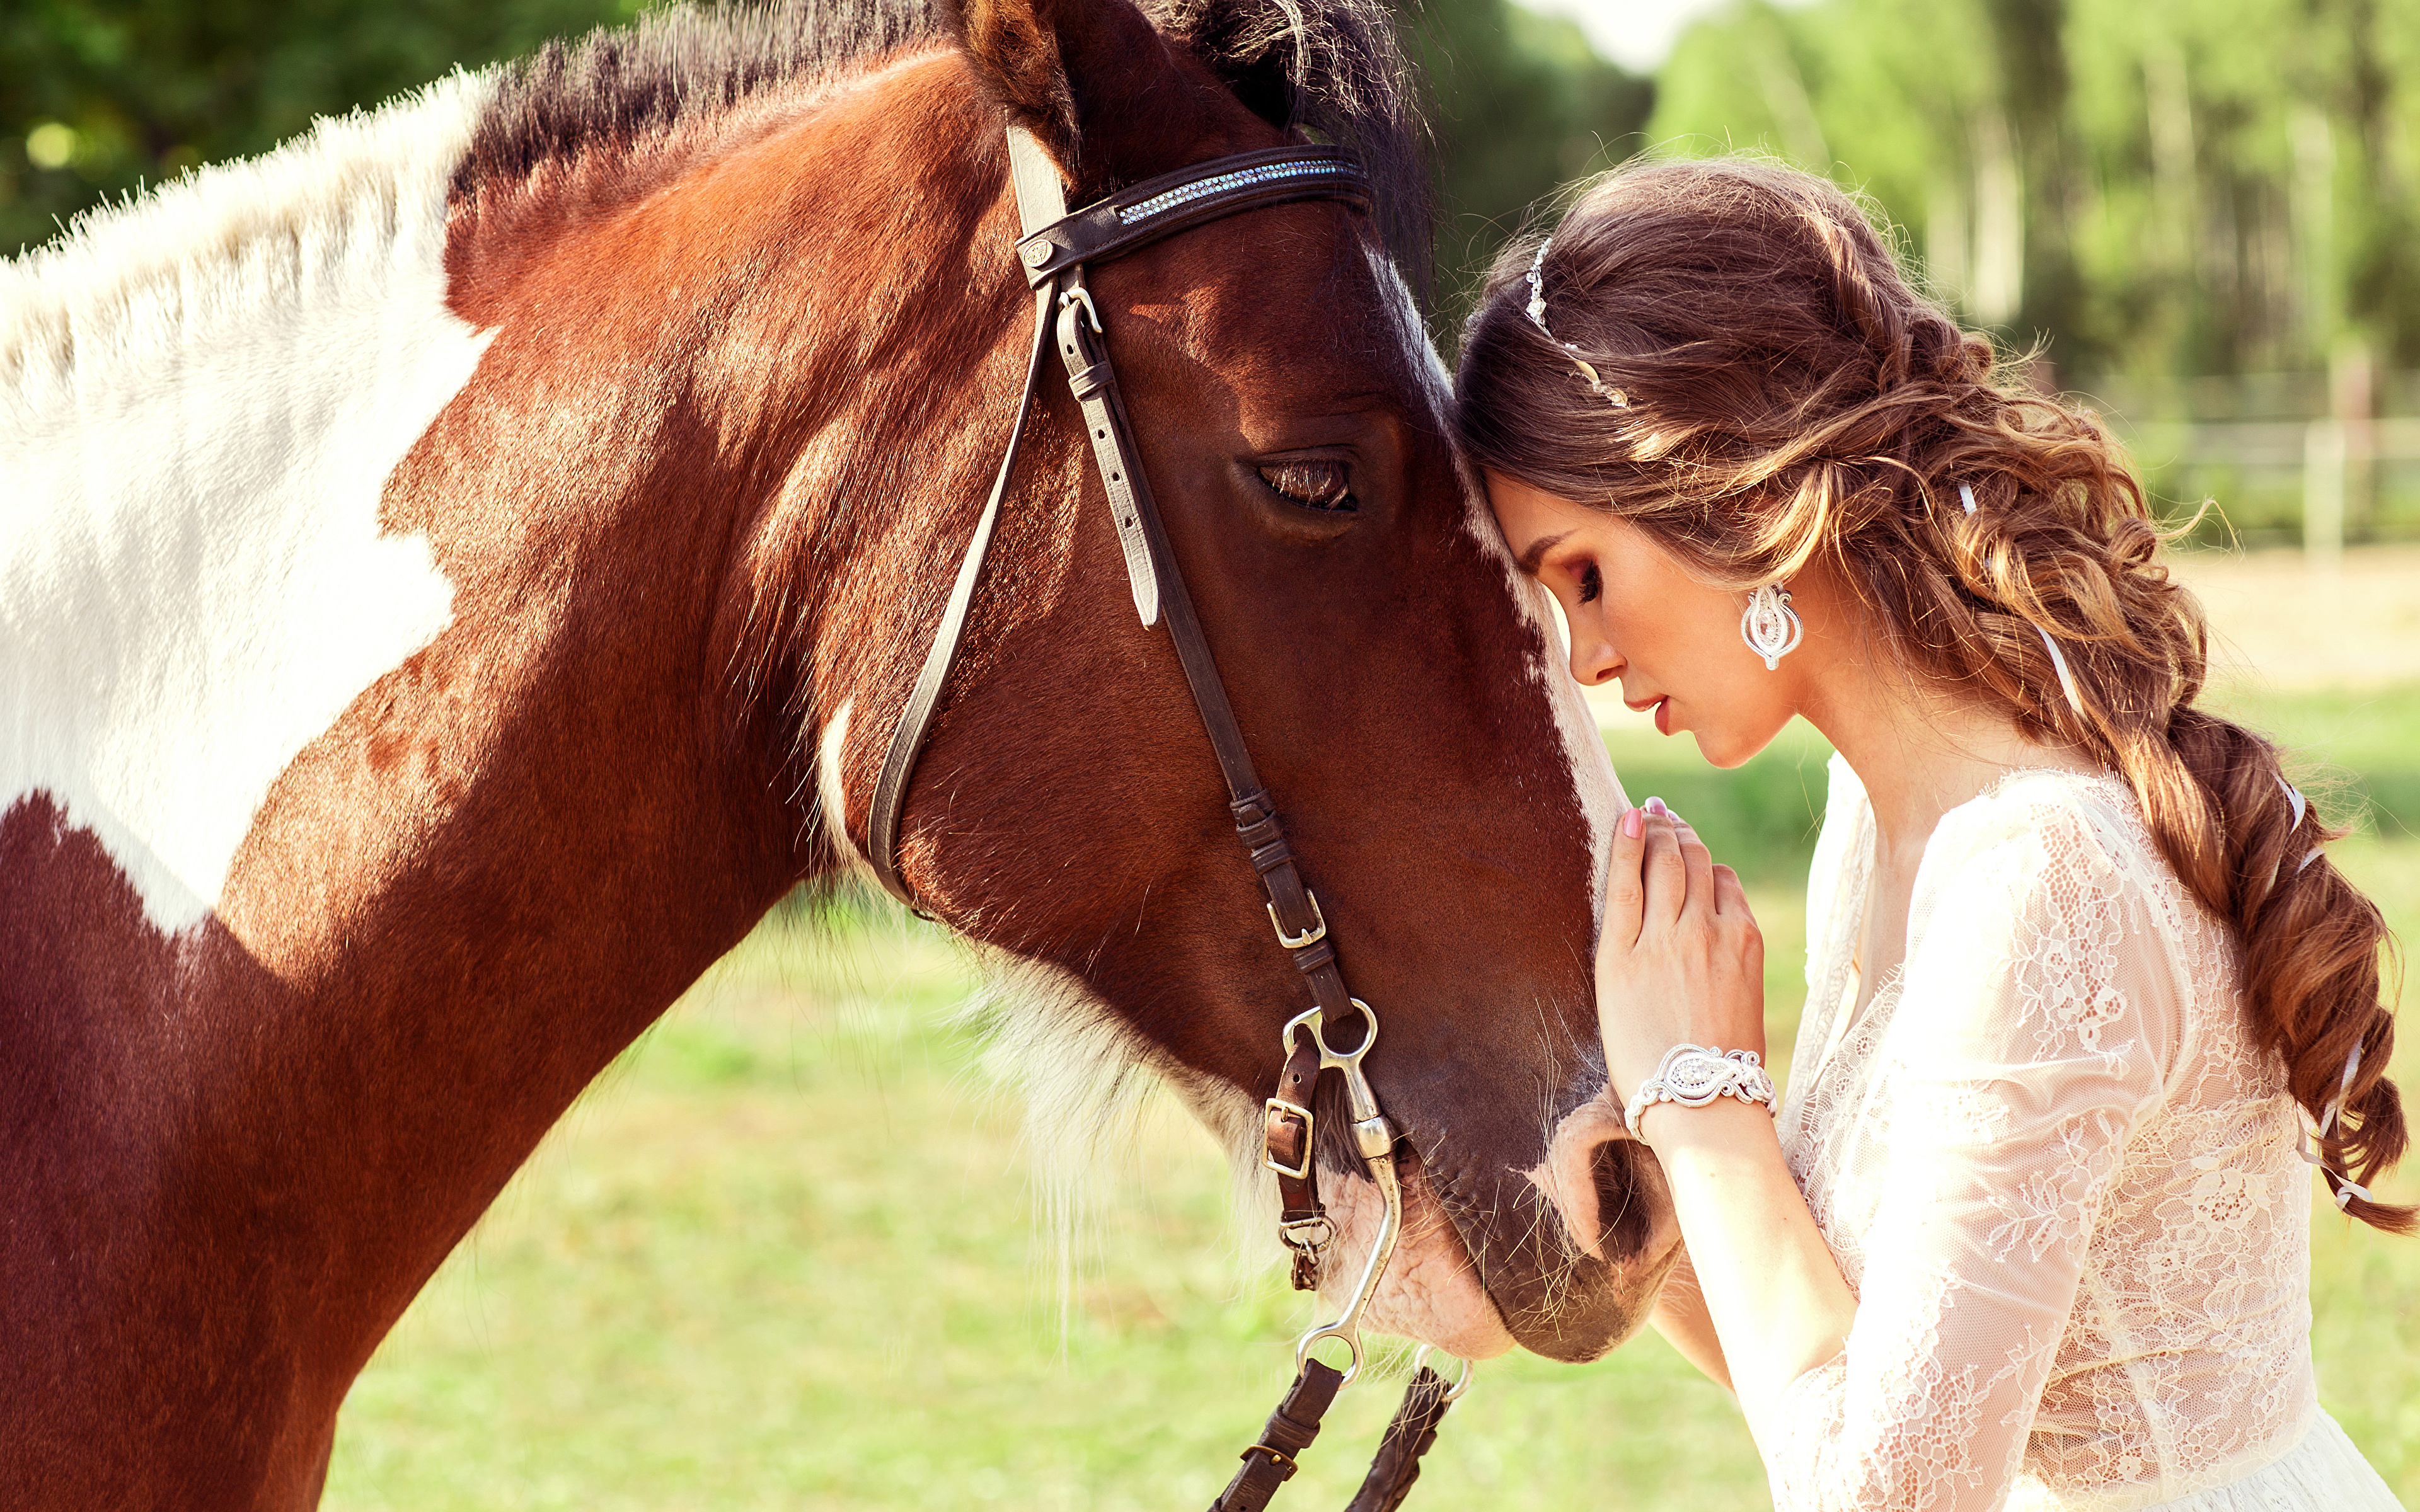 Девки и лошади. Девушка с лошадью. Фотосессия с лошадьми. Красивая фотосессия с лошадью. Девушка на коне.